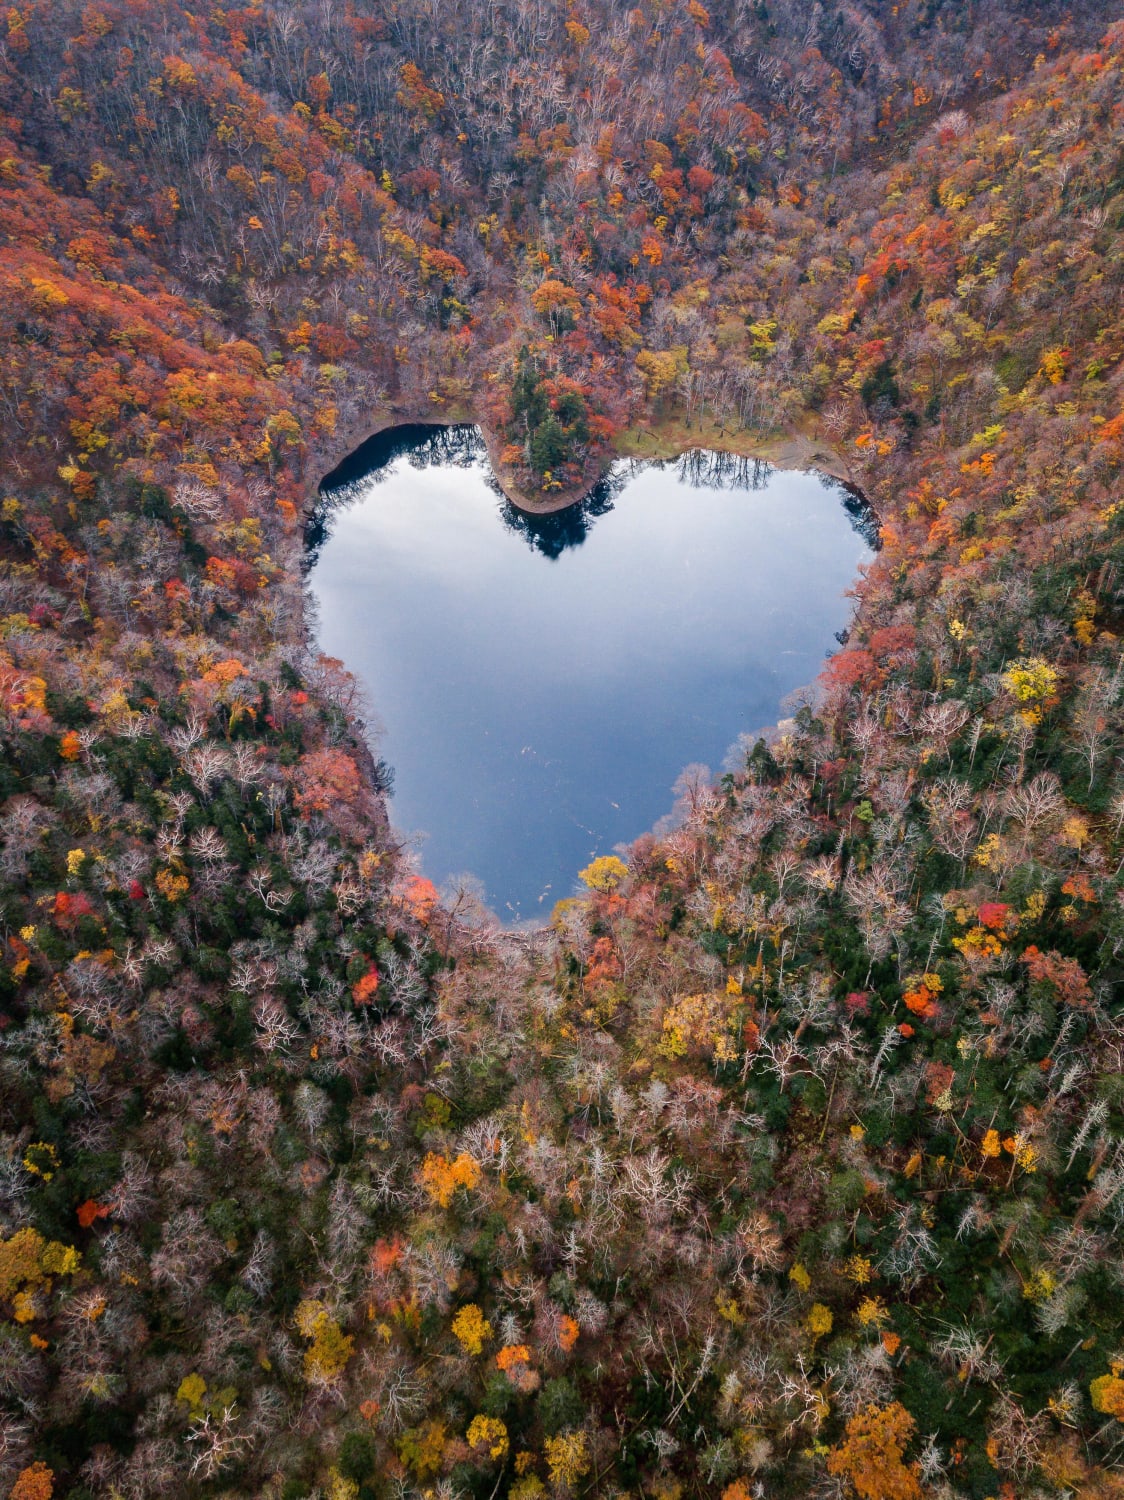 ITAP of a heart shaped lake in Hokkaido, Japan